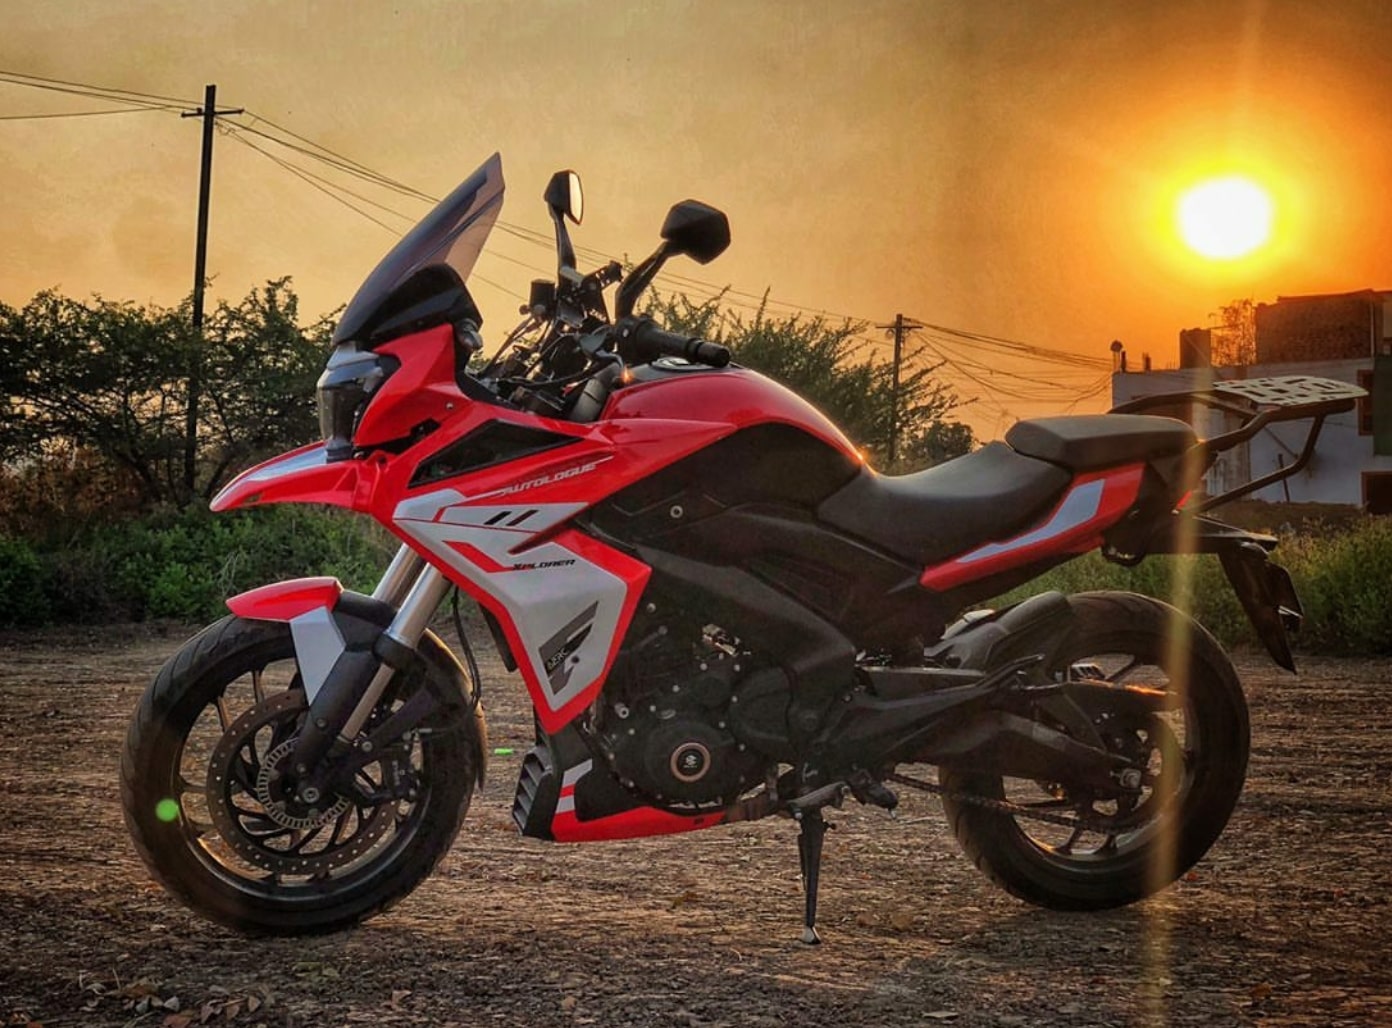 Bajaj Xplorer 400 Adventure Motorcycle Looks Mind Blowing! - portrait